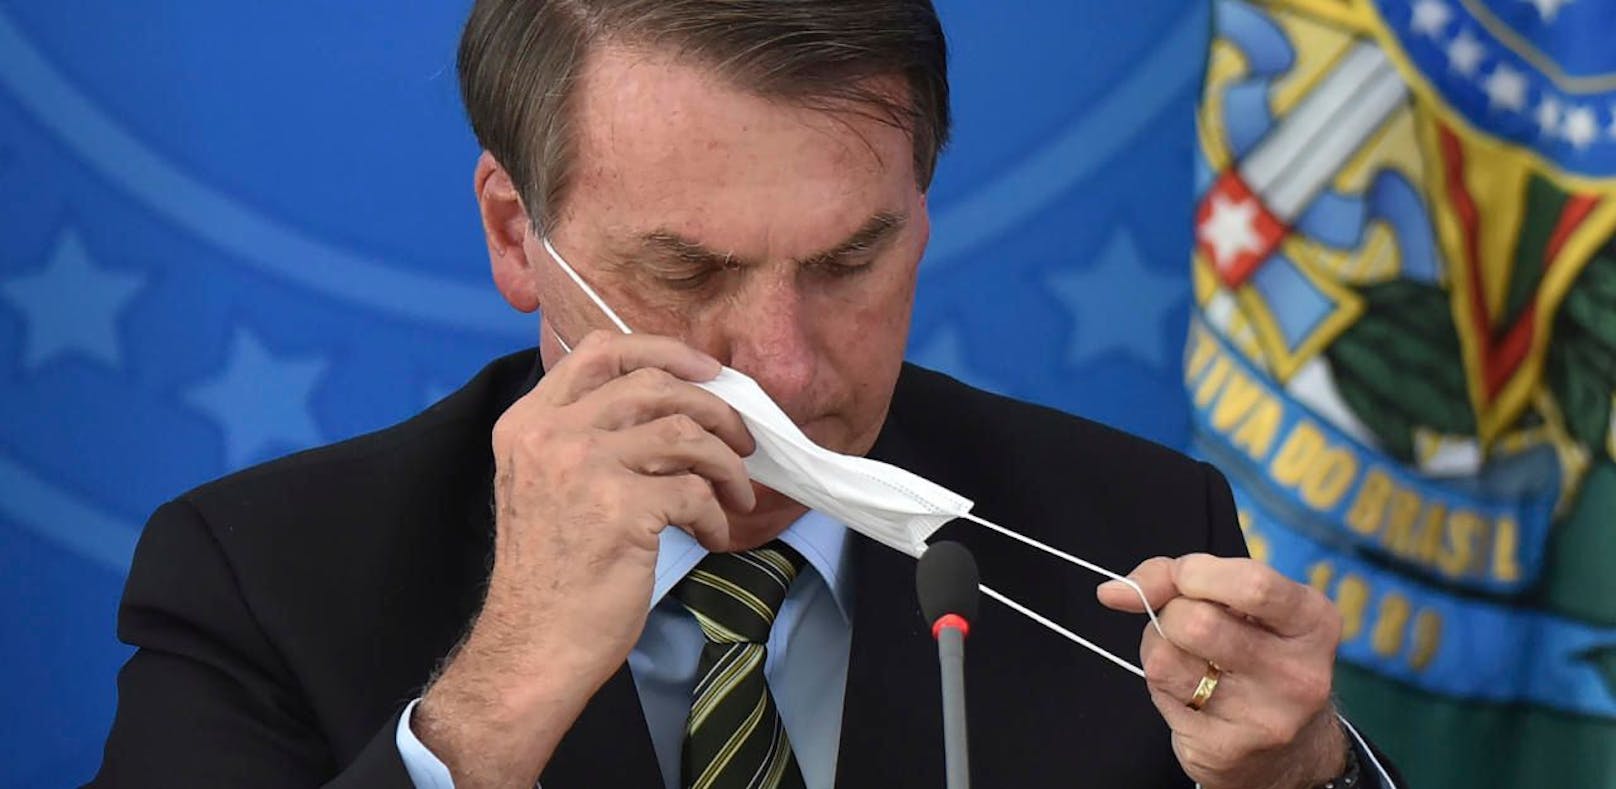 Bolsonaro verharmlost Corona: "Nur kleine Grippe"